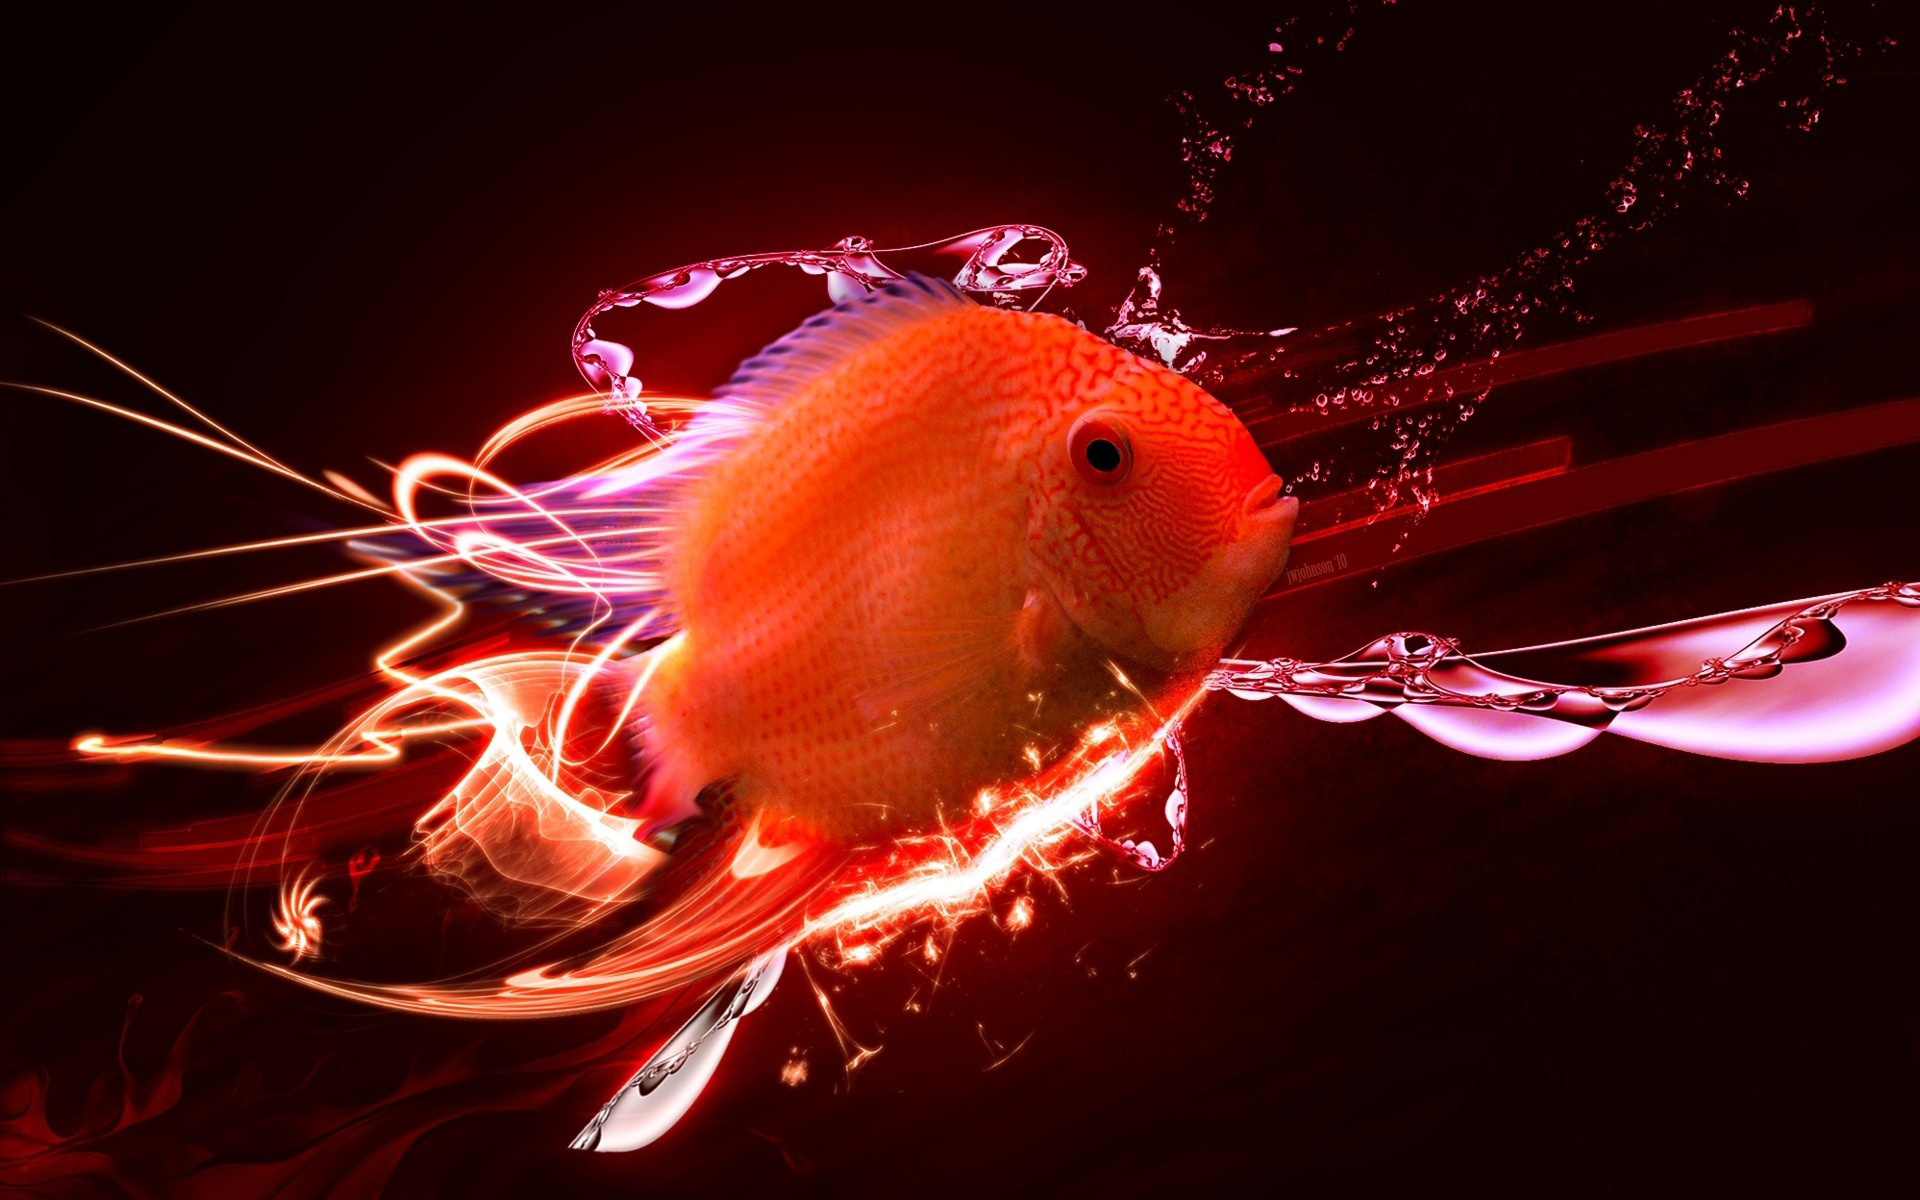 animals, Fish, Cg, 3d, Digital art, Manipulations, Colors, Orange, Bright Wallpaper